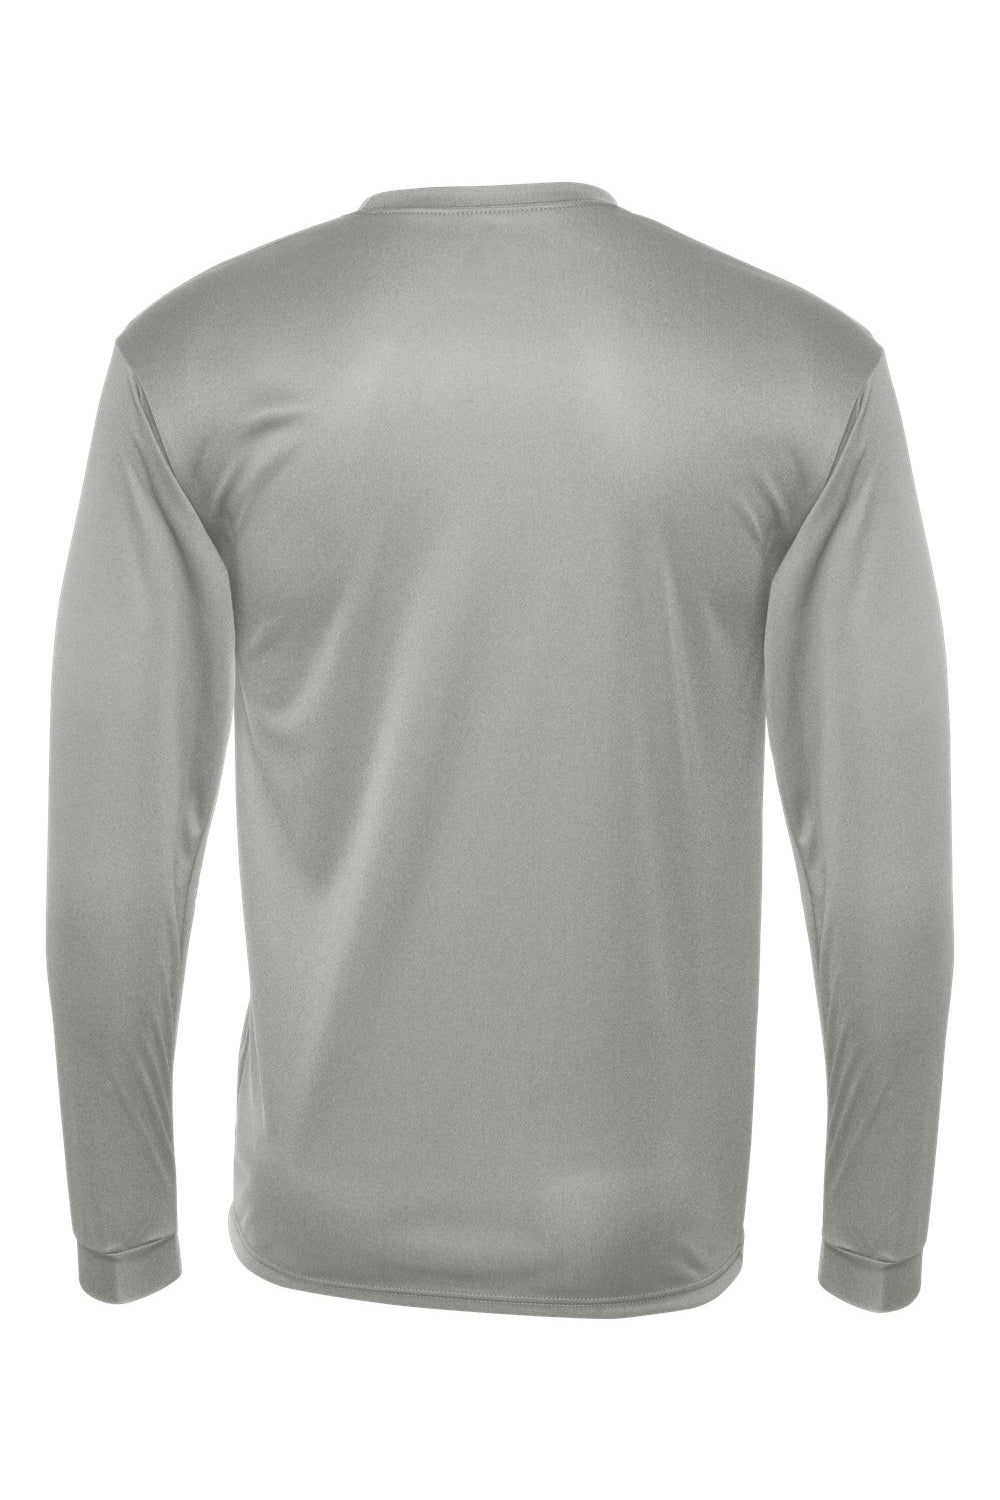 C2 Sport 5104 Mens Performance Moisture Wicking Long Sleeve Crewneck T-Shirt Silver Grey Flat Back